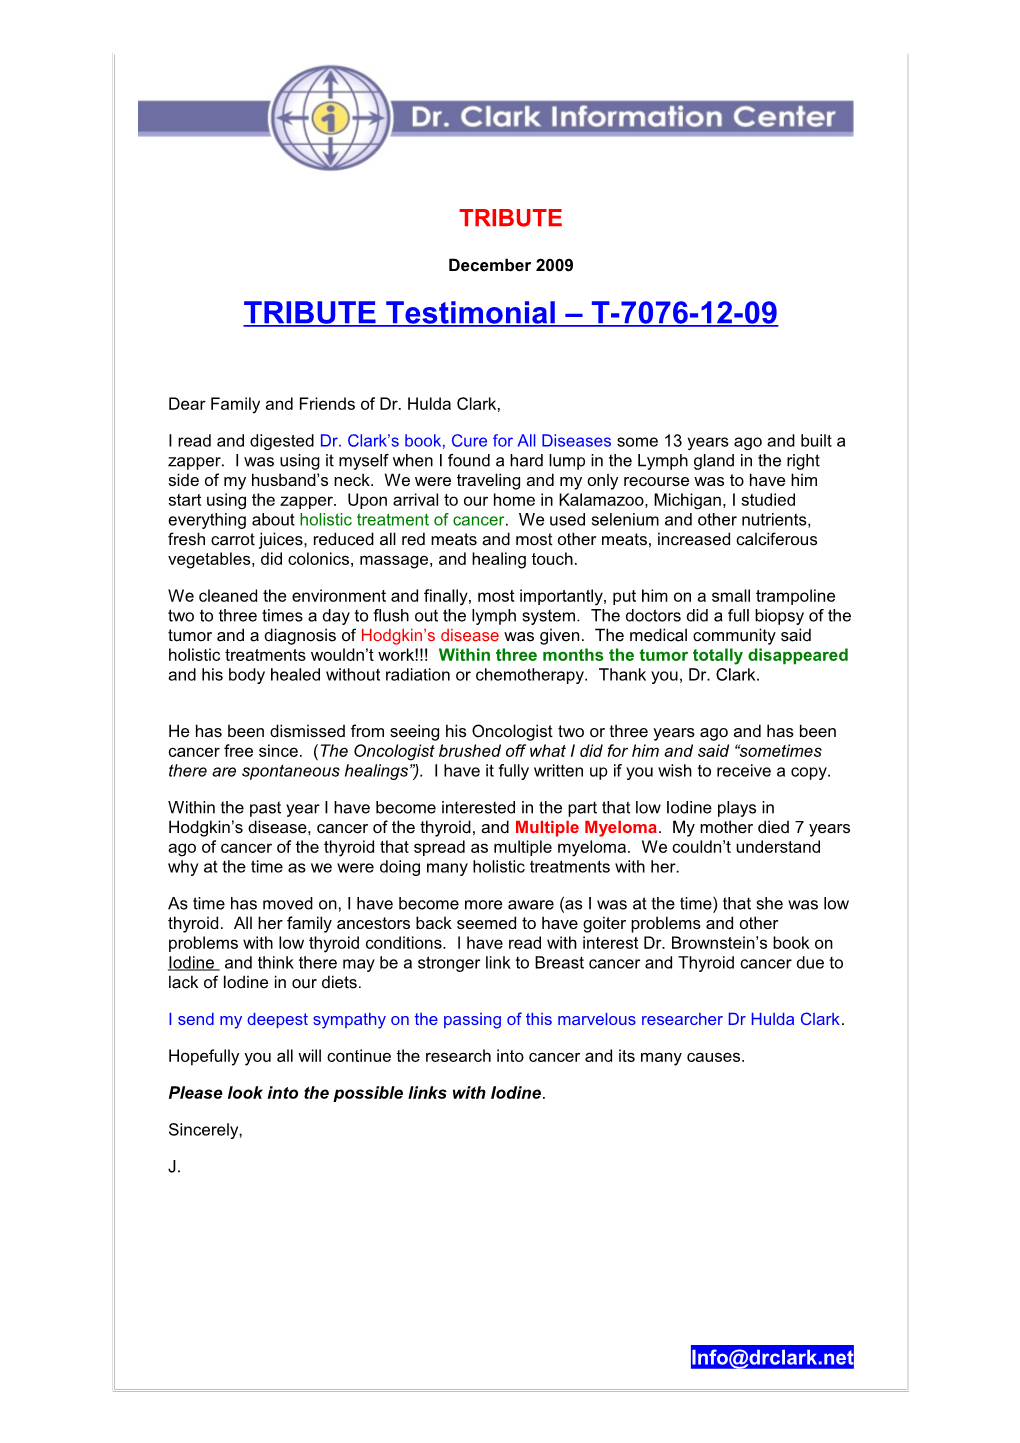 TRIBUTE Testimonial T-7076-12-09